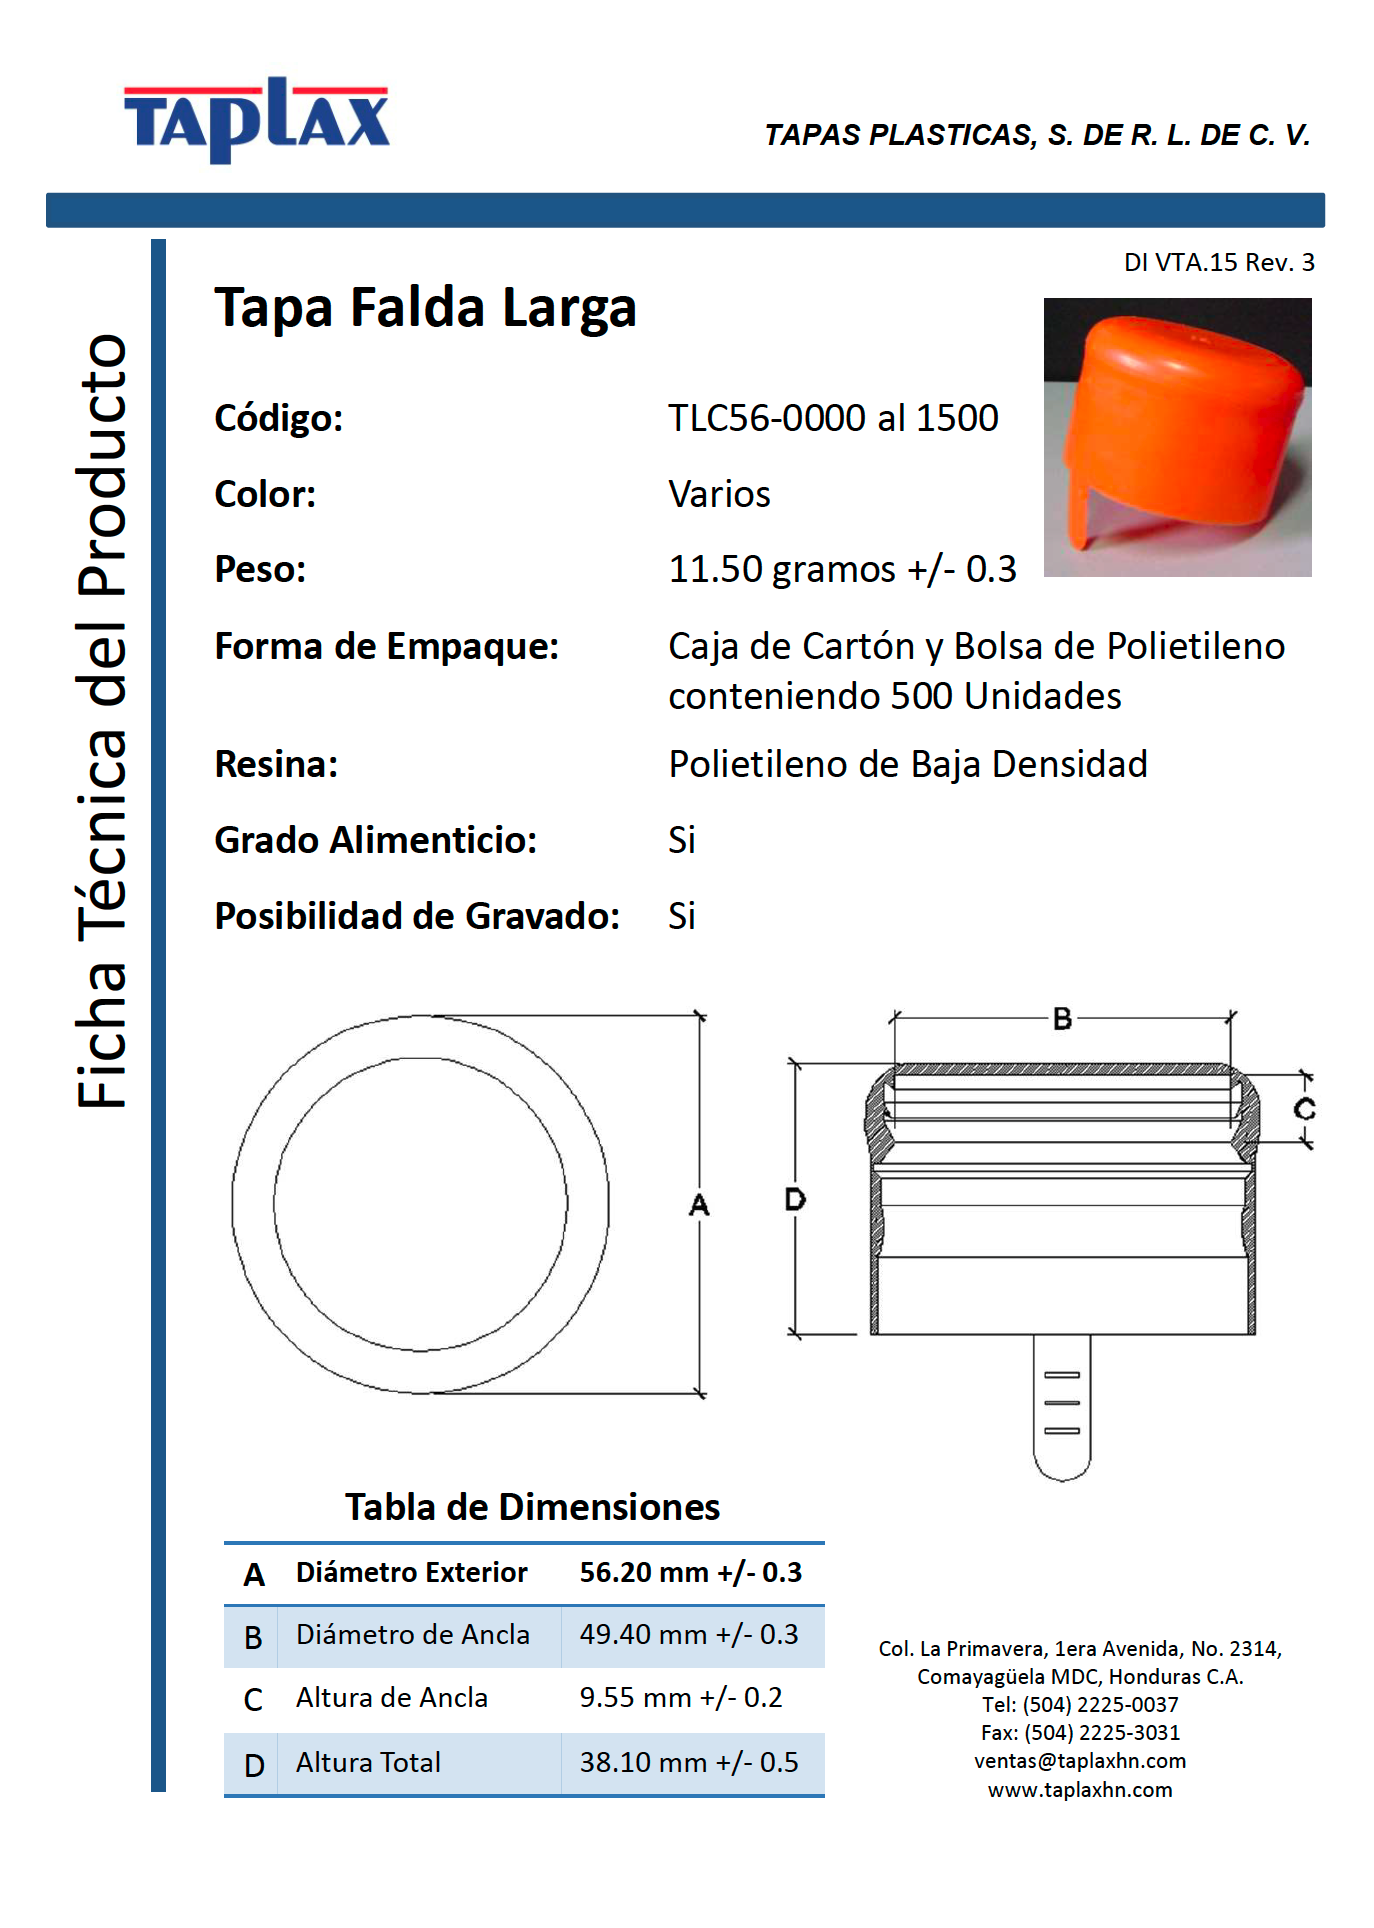 TAPLAX - Tapas Plásticas de Honduras